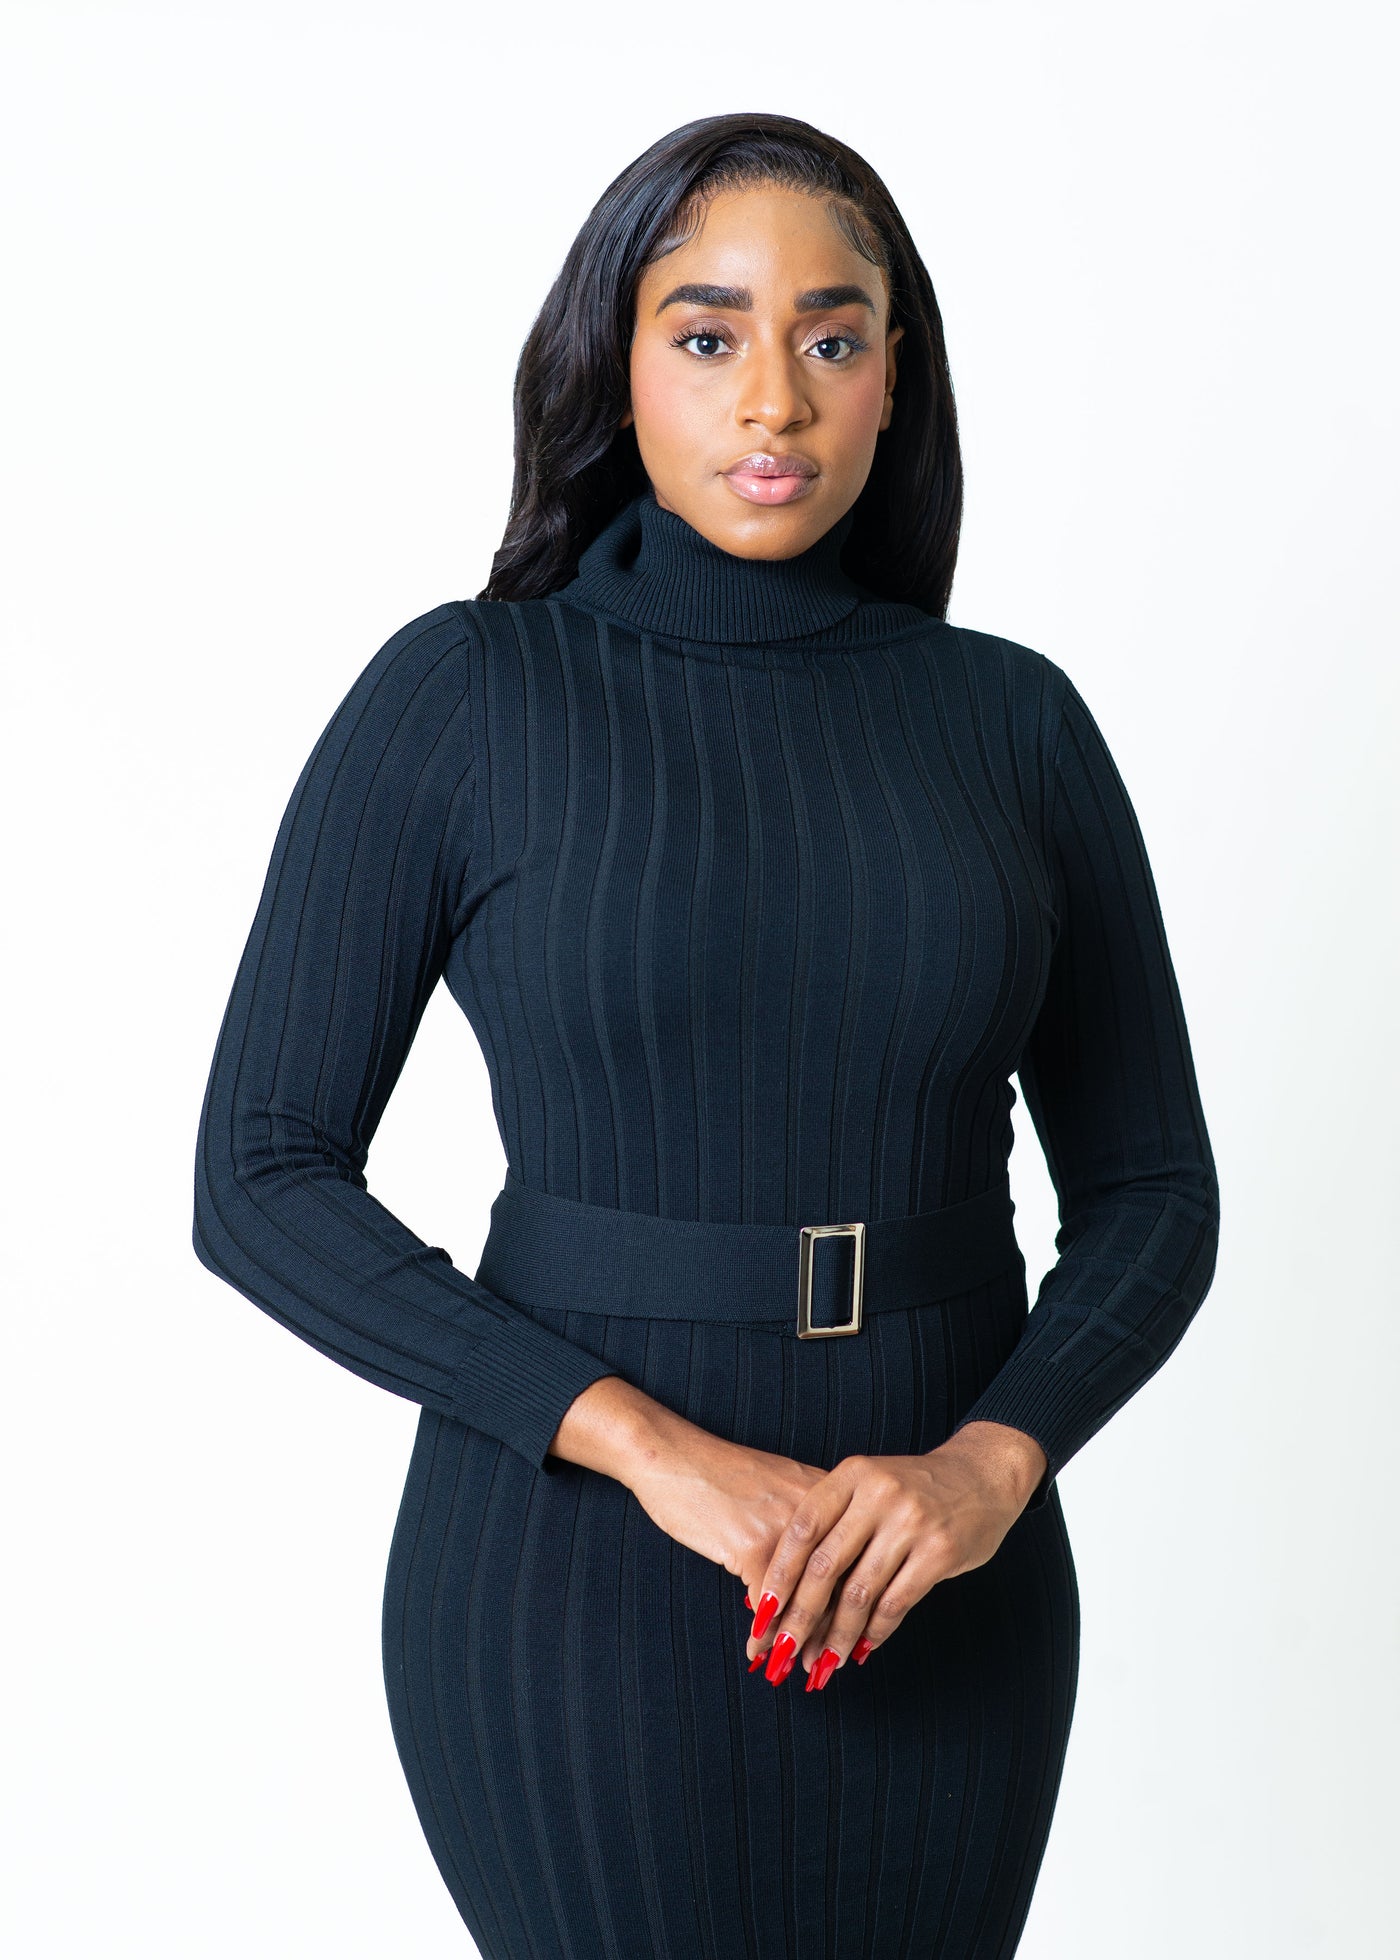 Black Hot Topic Sweater dress